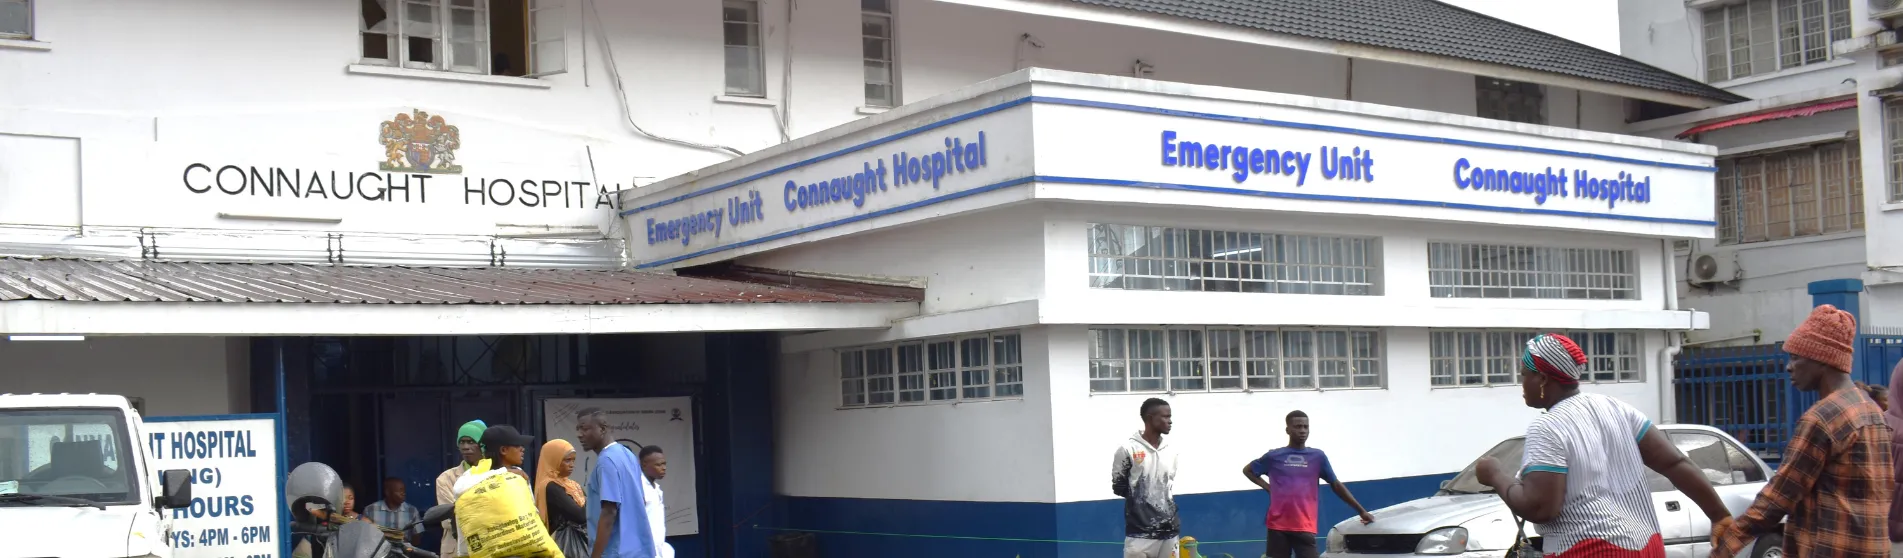 Connaught Hospital emergency unit_1903x558